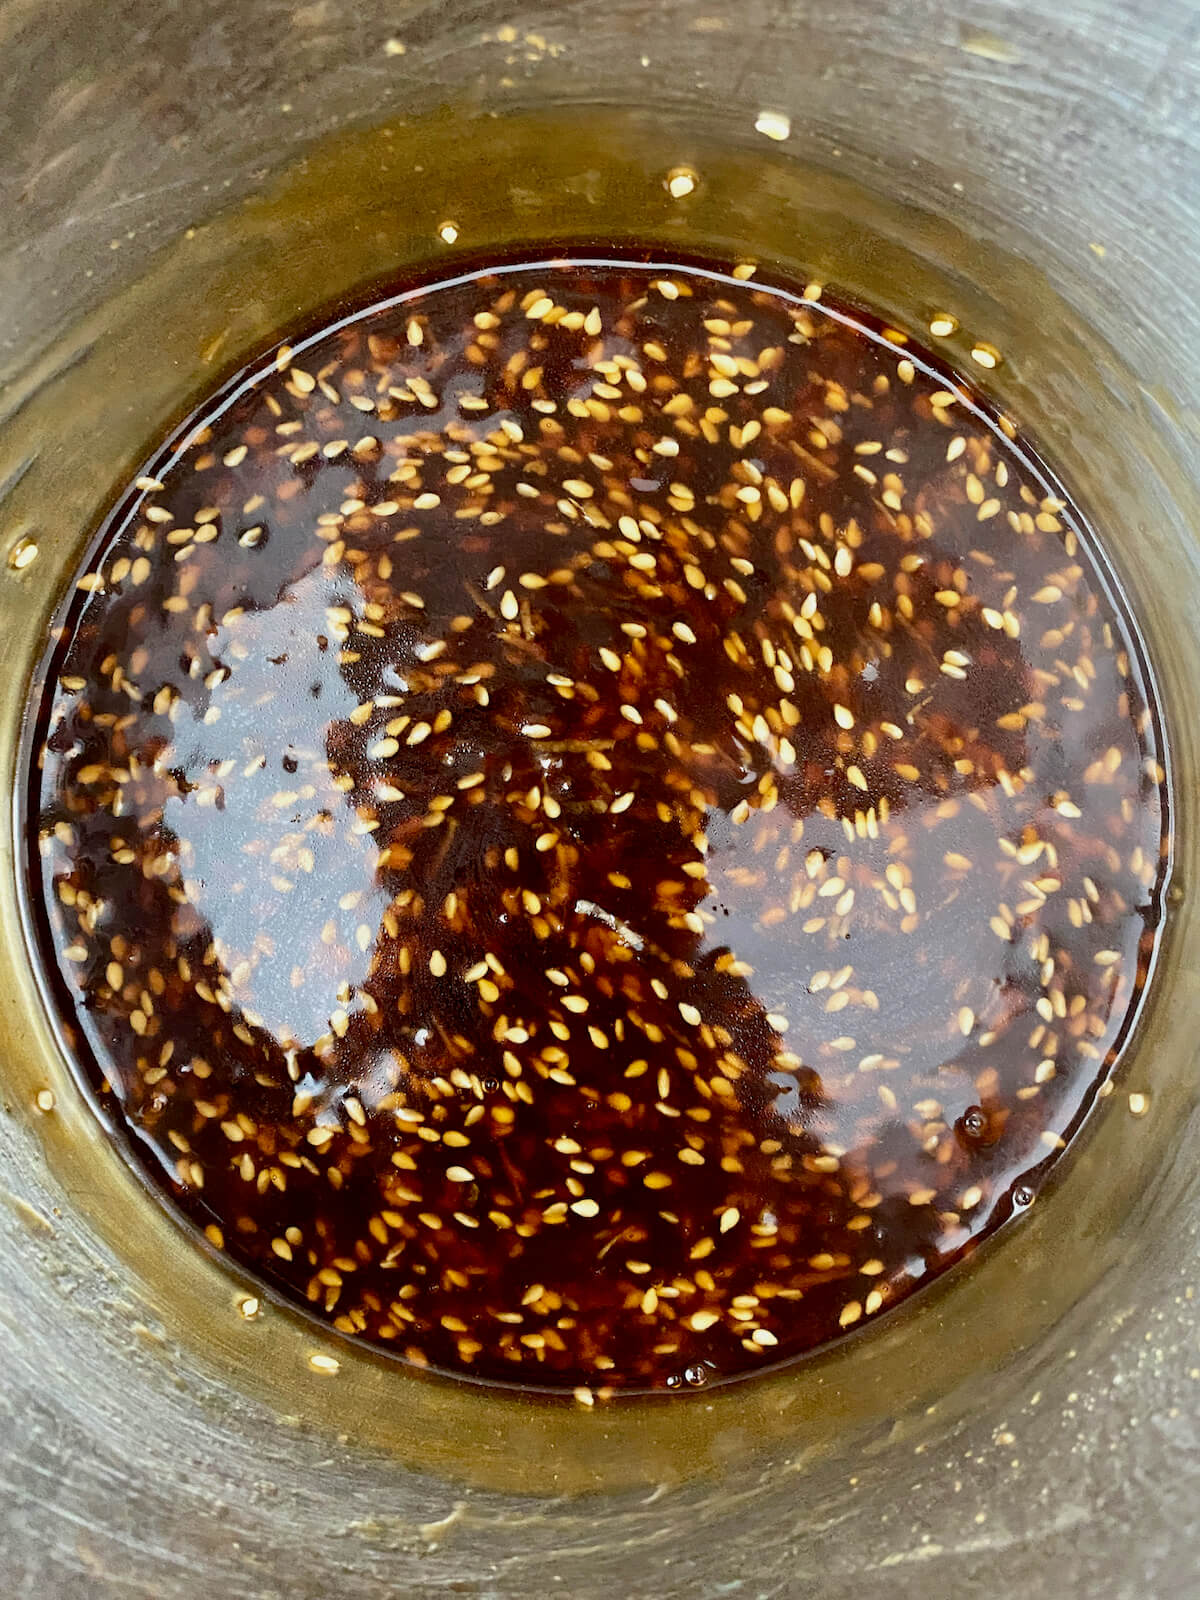 Sesame garlic sauce in a stainless steel pot.